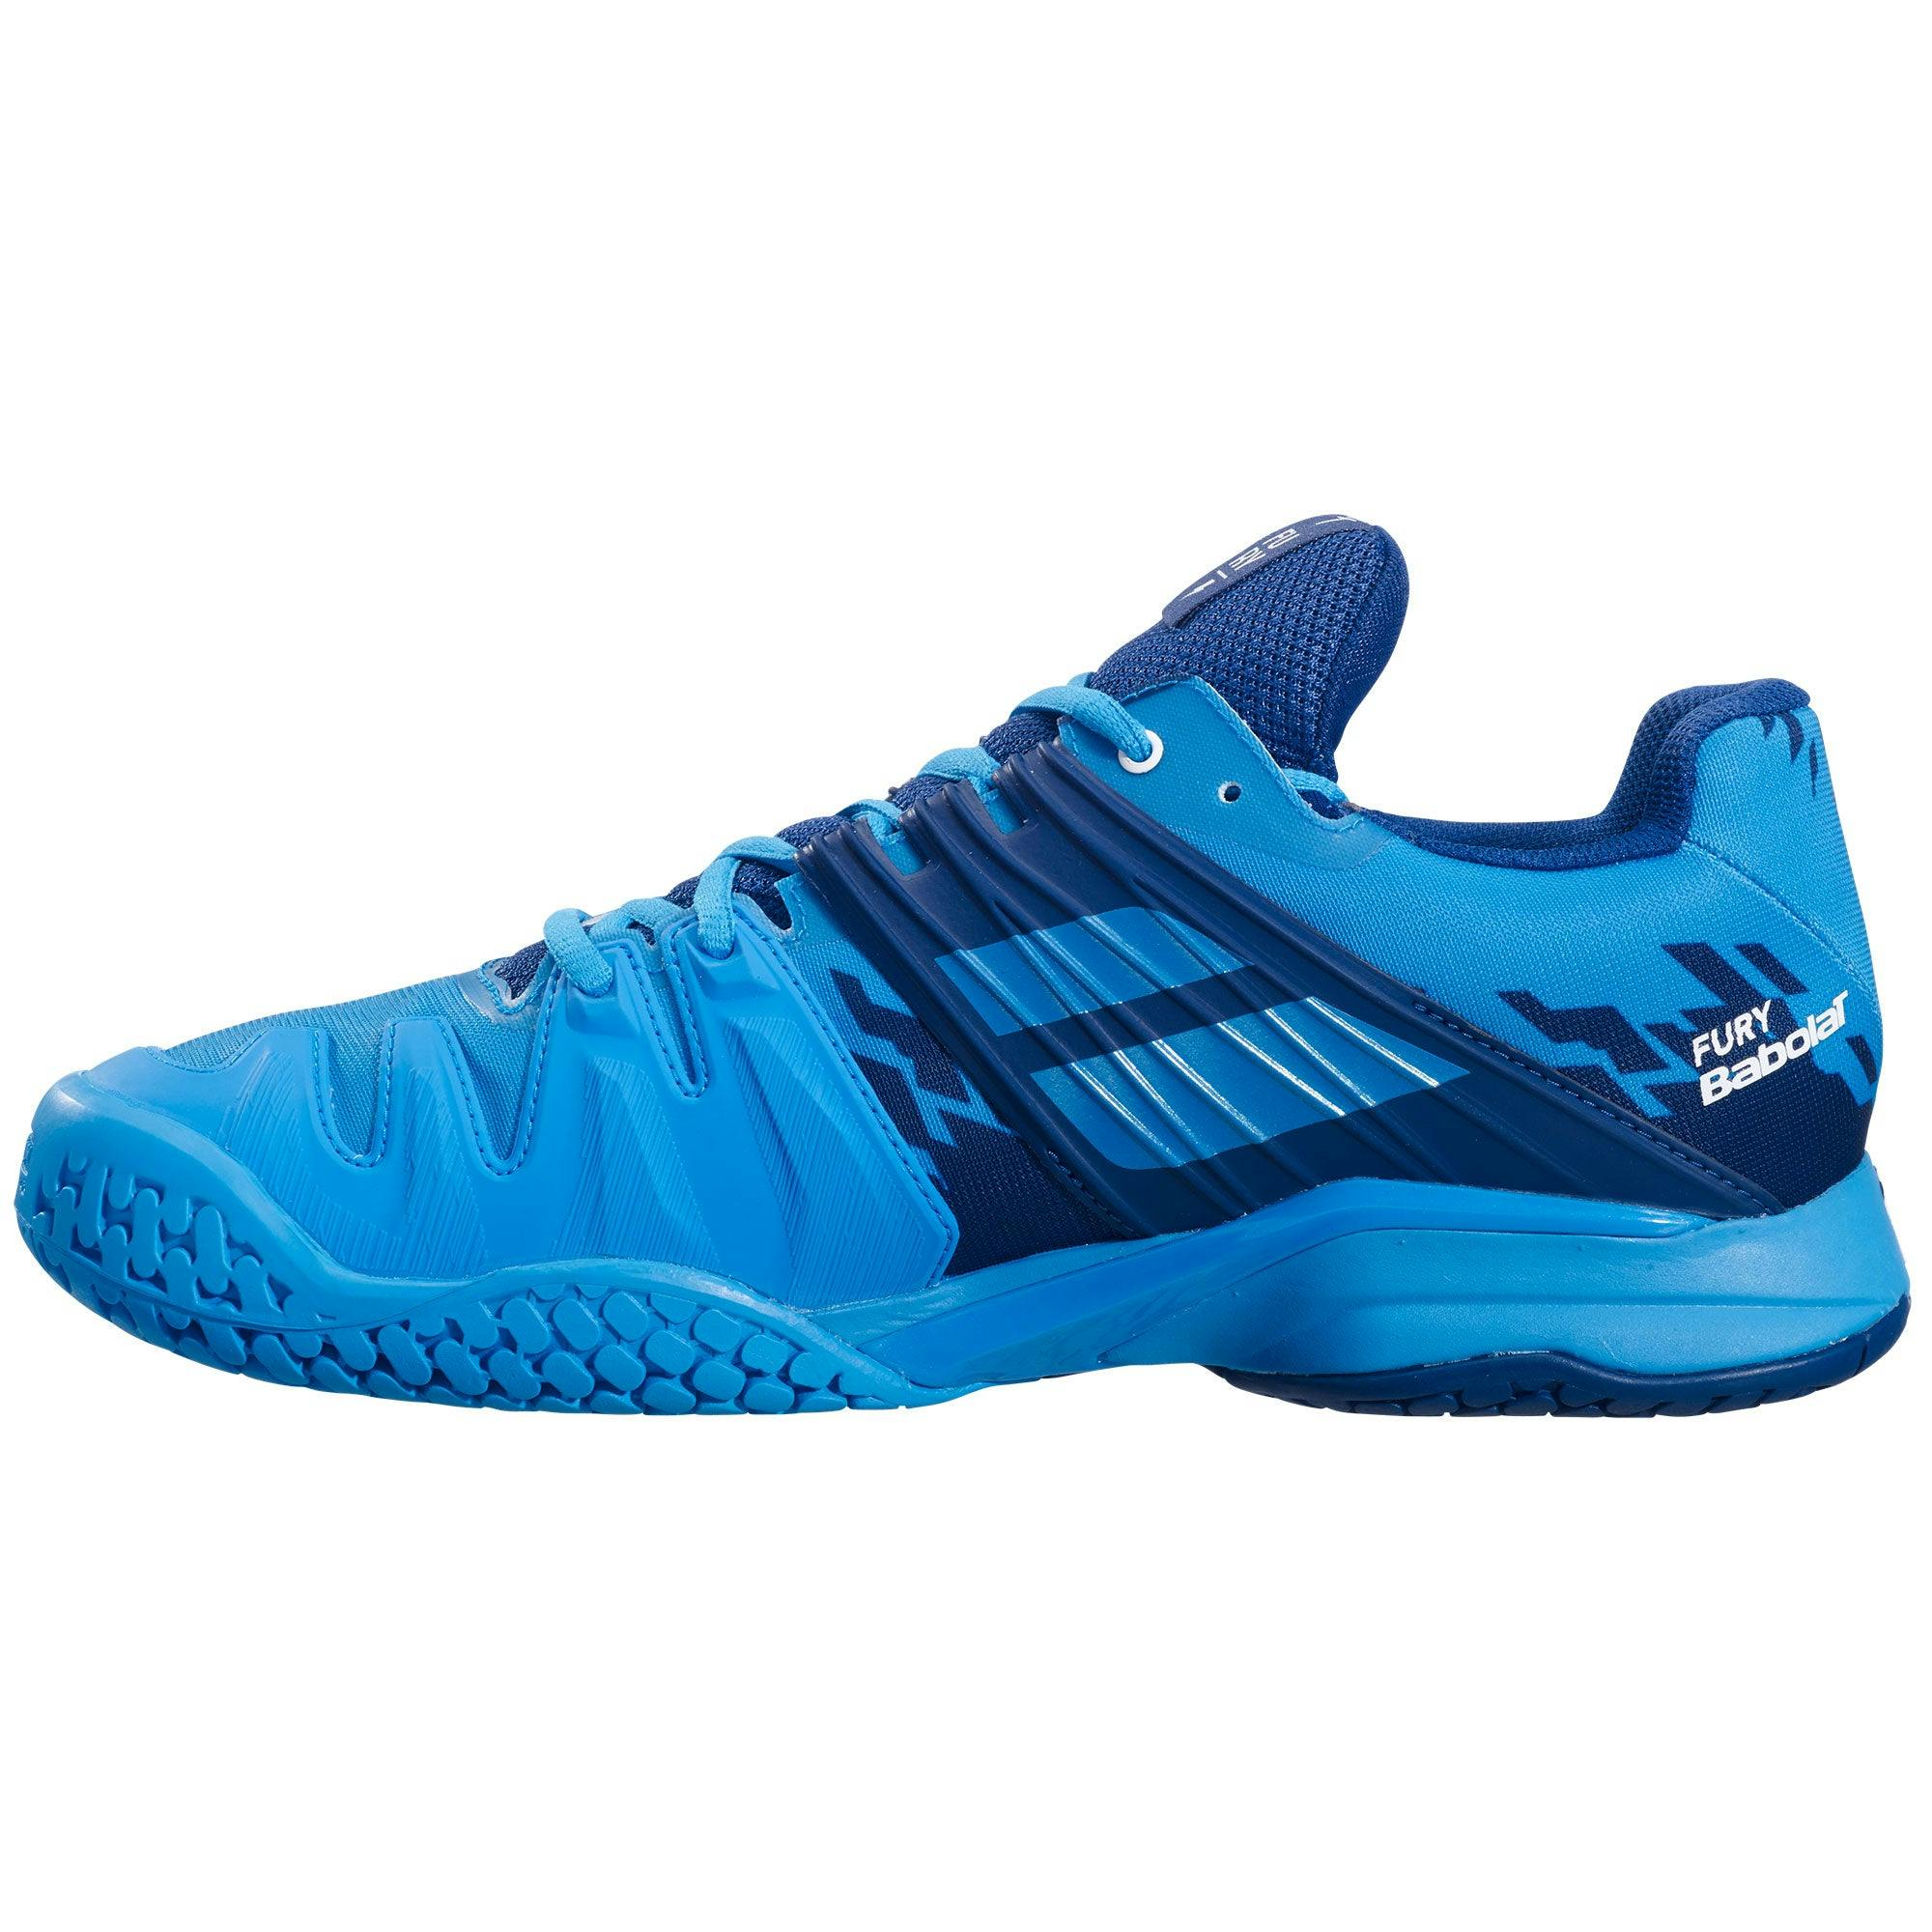 Babolat Propulse Fury All Court Mens Tennis Shoes - 9.5 / DRIVE BLUE 4086 / D Medium